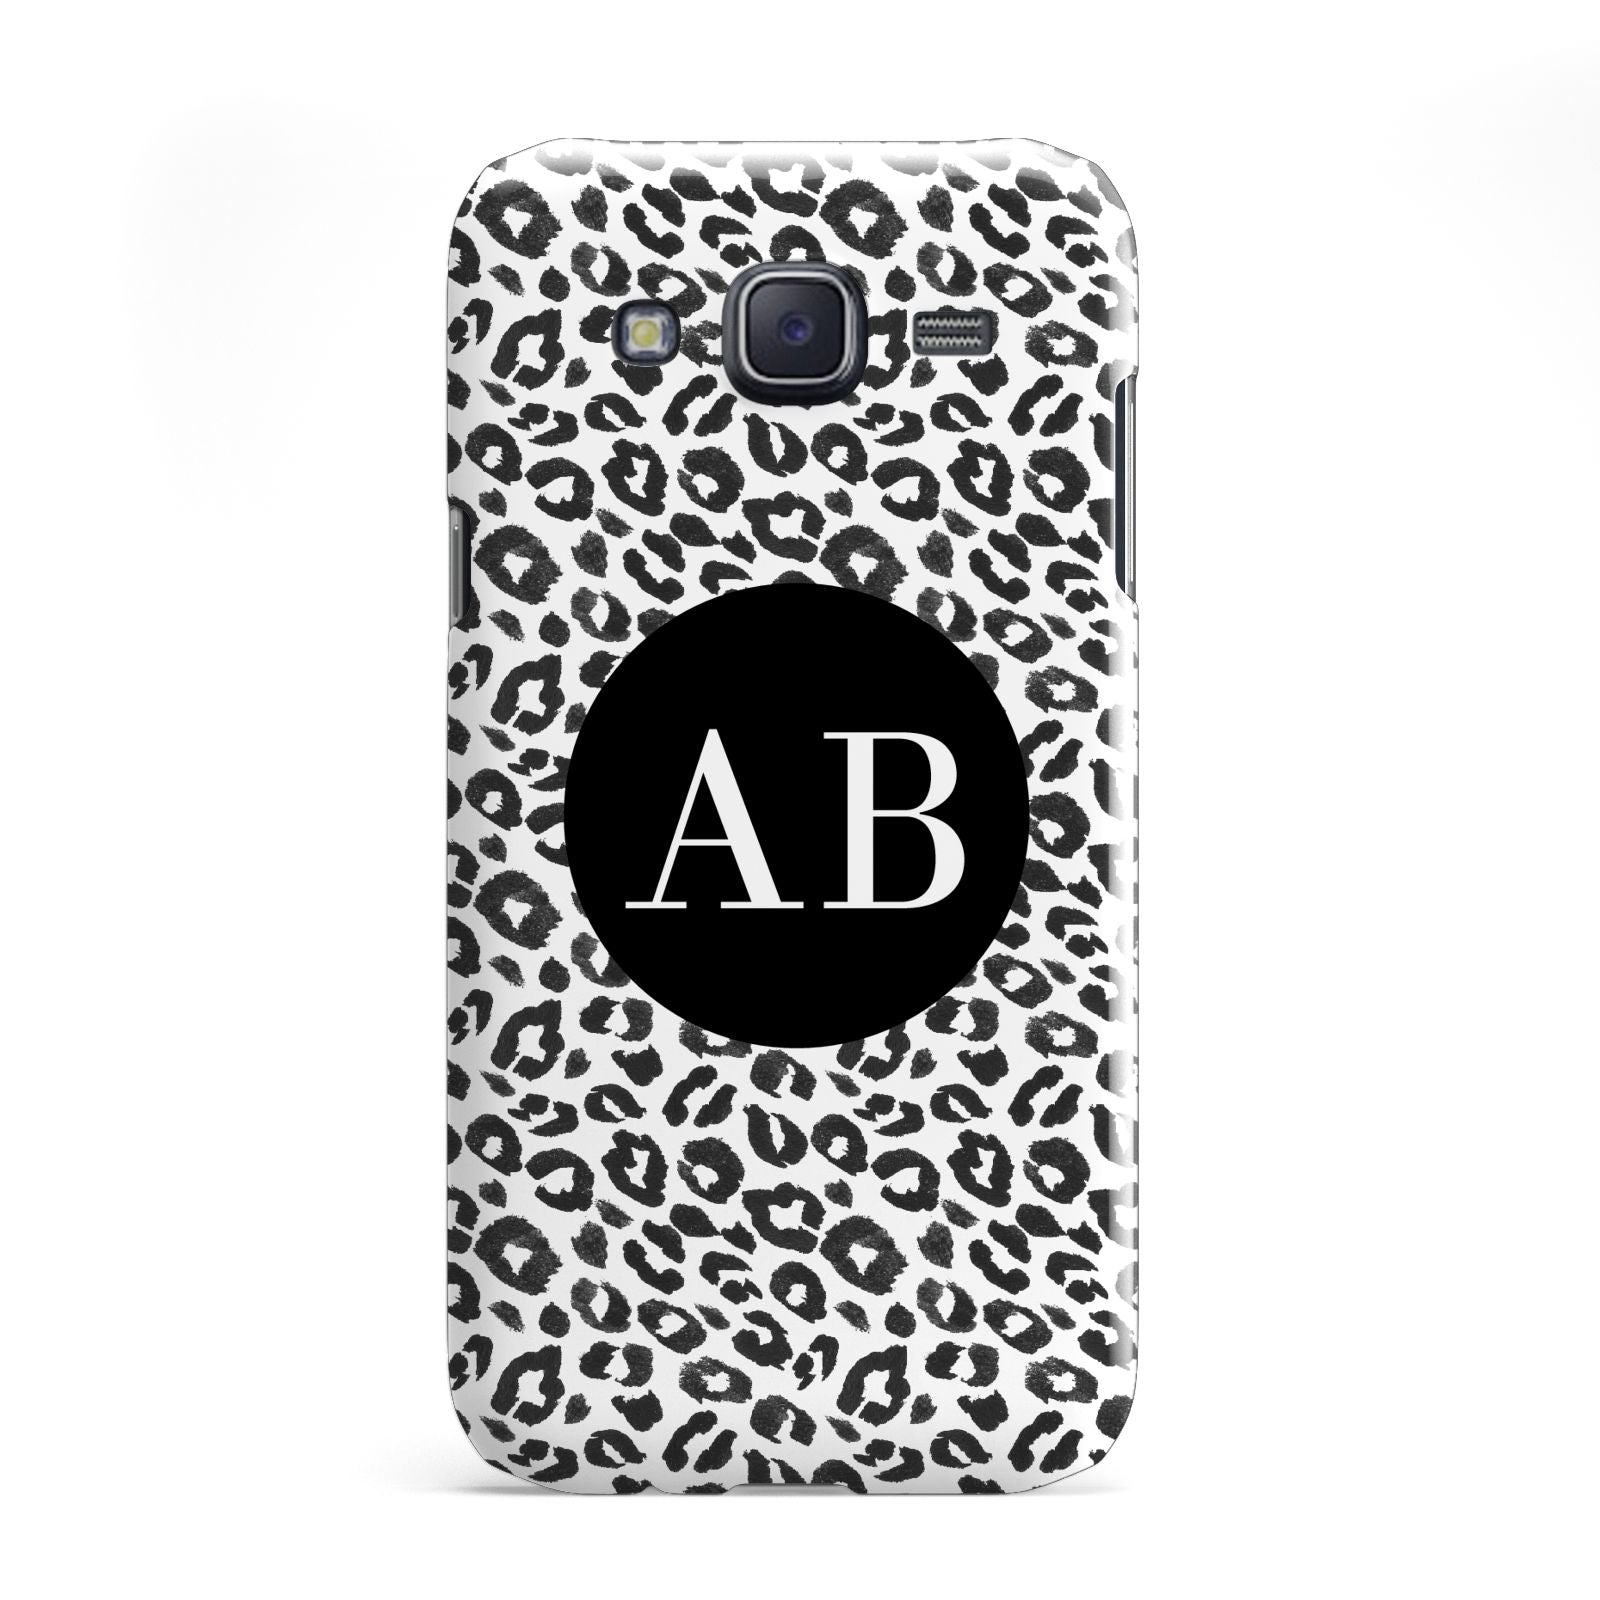 Leopard Print Black and White Samsung Galaxy J5 Case